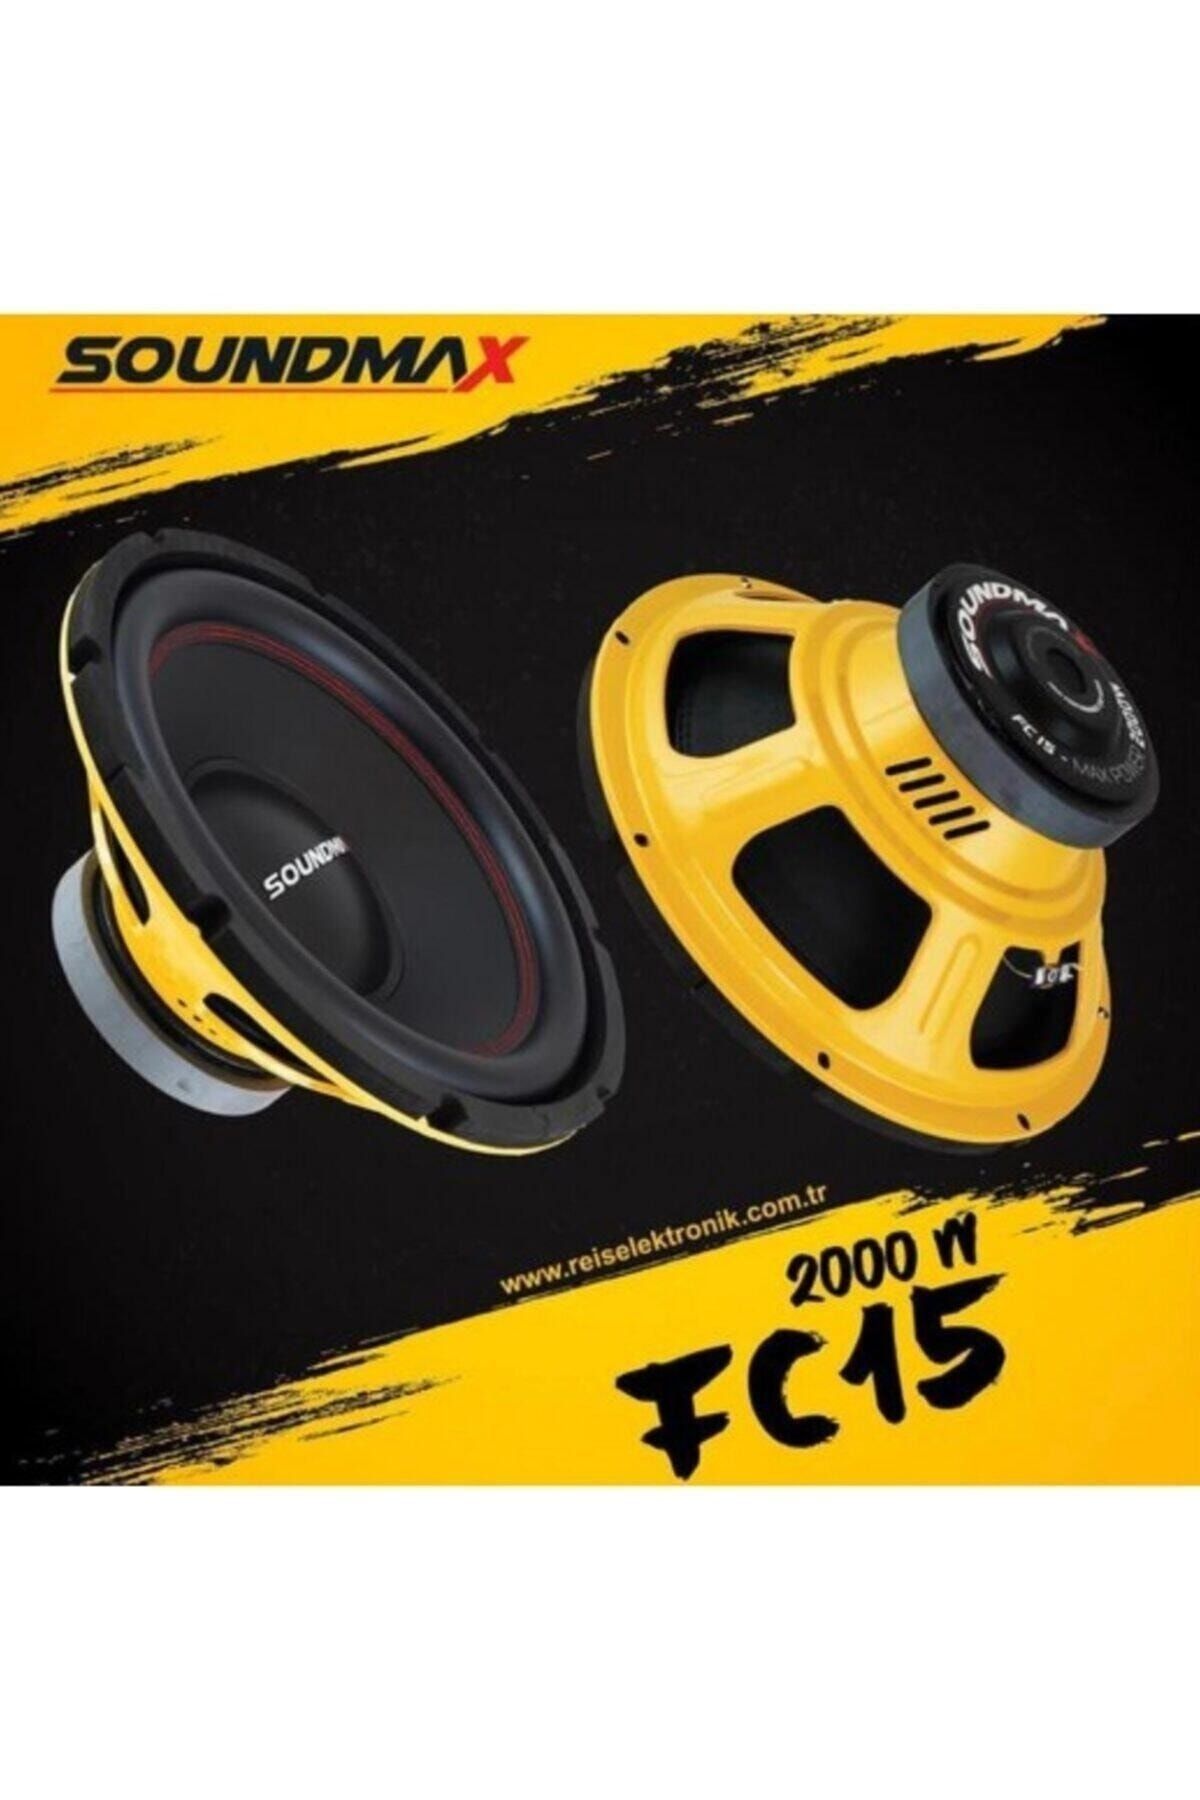 Soundmax Sx-fc15 Bass Subwoofer 38cm 2000wat 600w Rms Power Oto Bufur